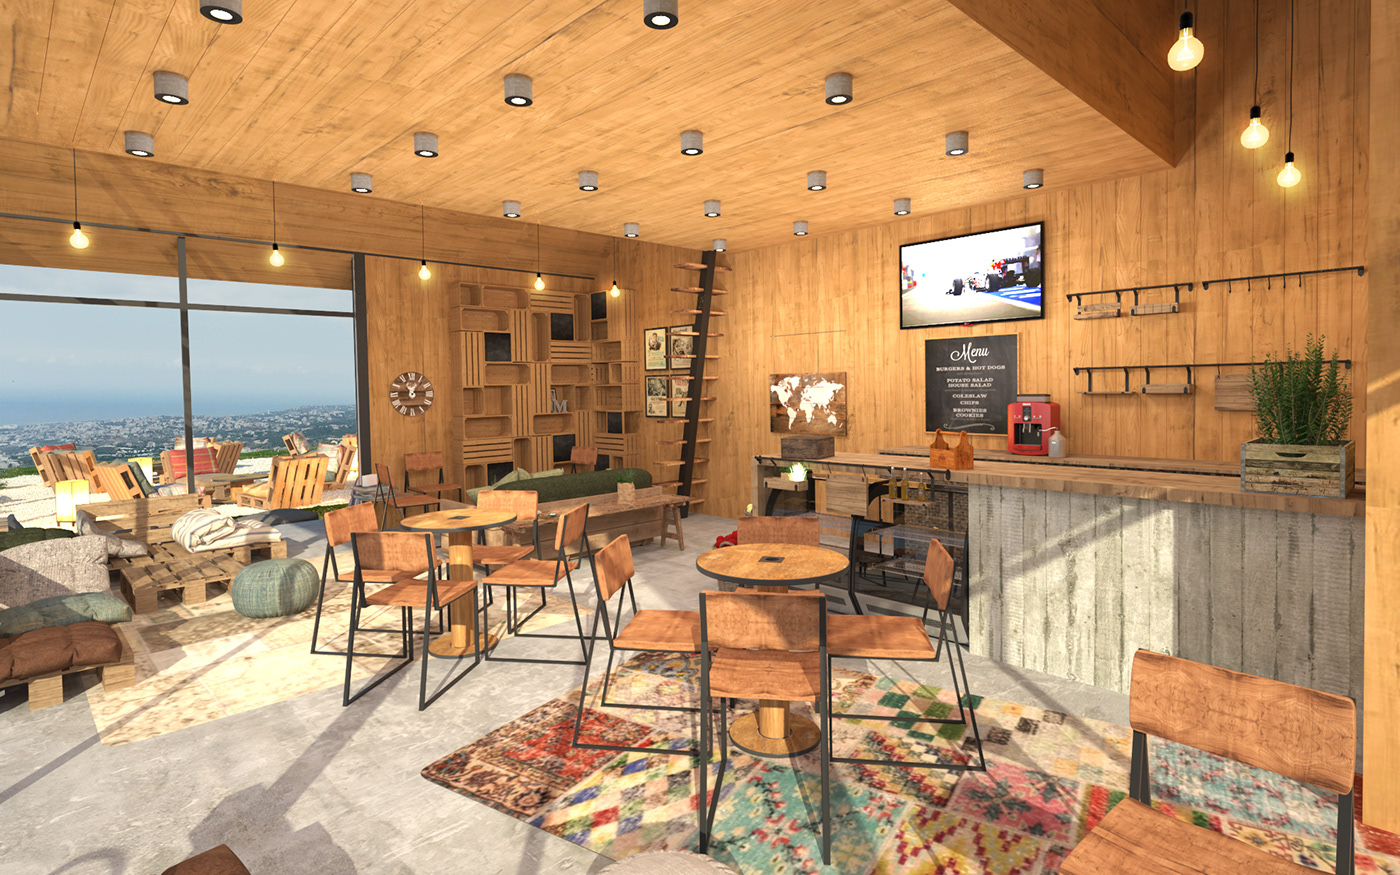 #architectue #behance #cabin #coffee #Design #glass  #shop #steel #wood